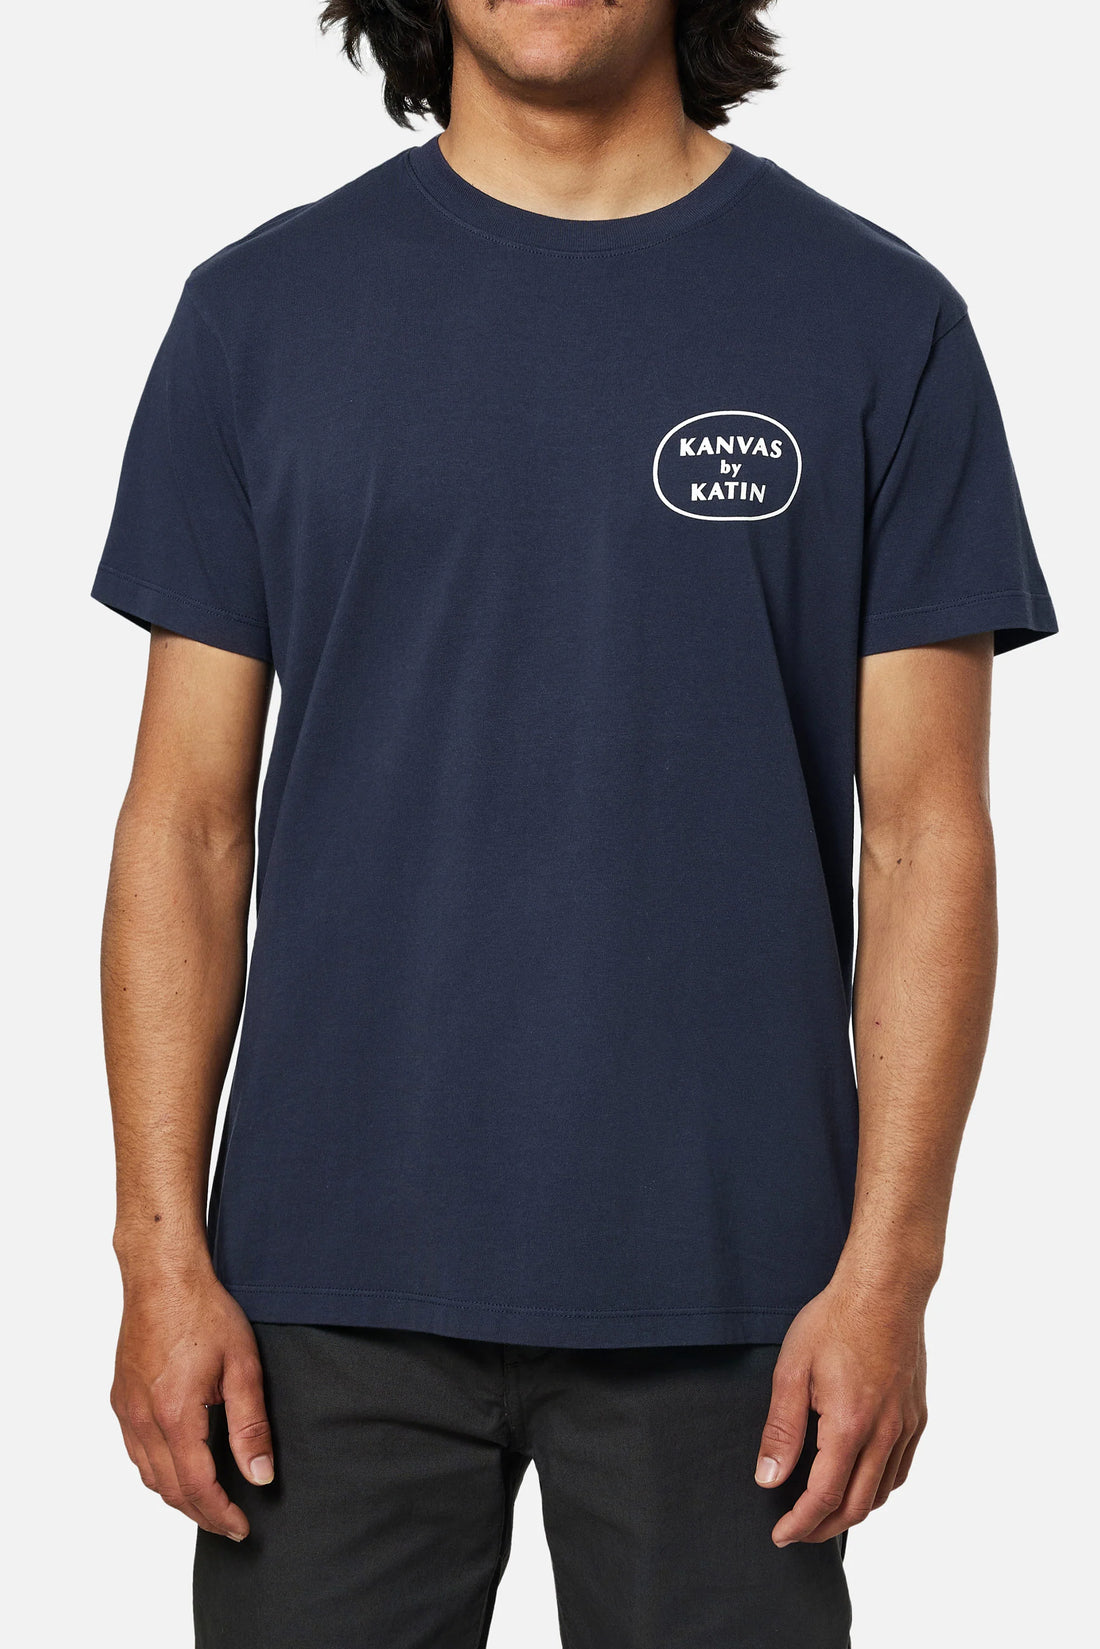 T-Shirt Trimming Bleu Marine Katin